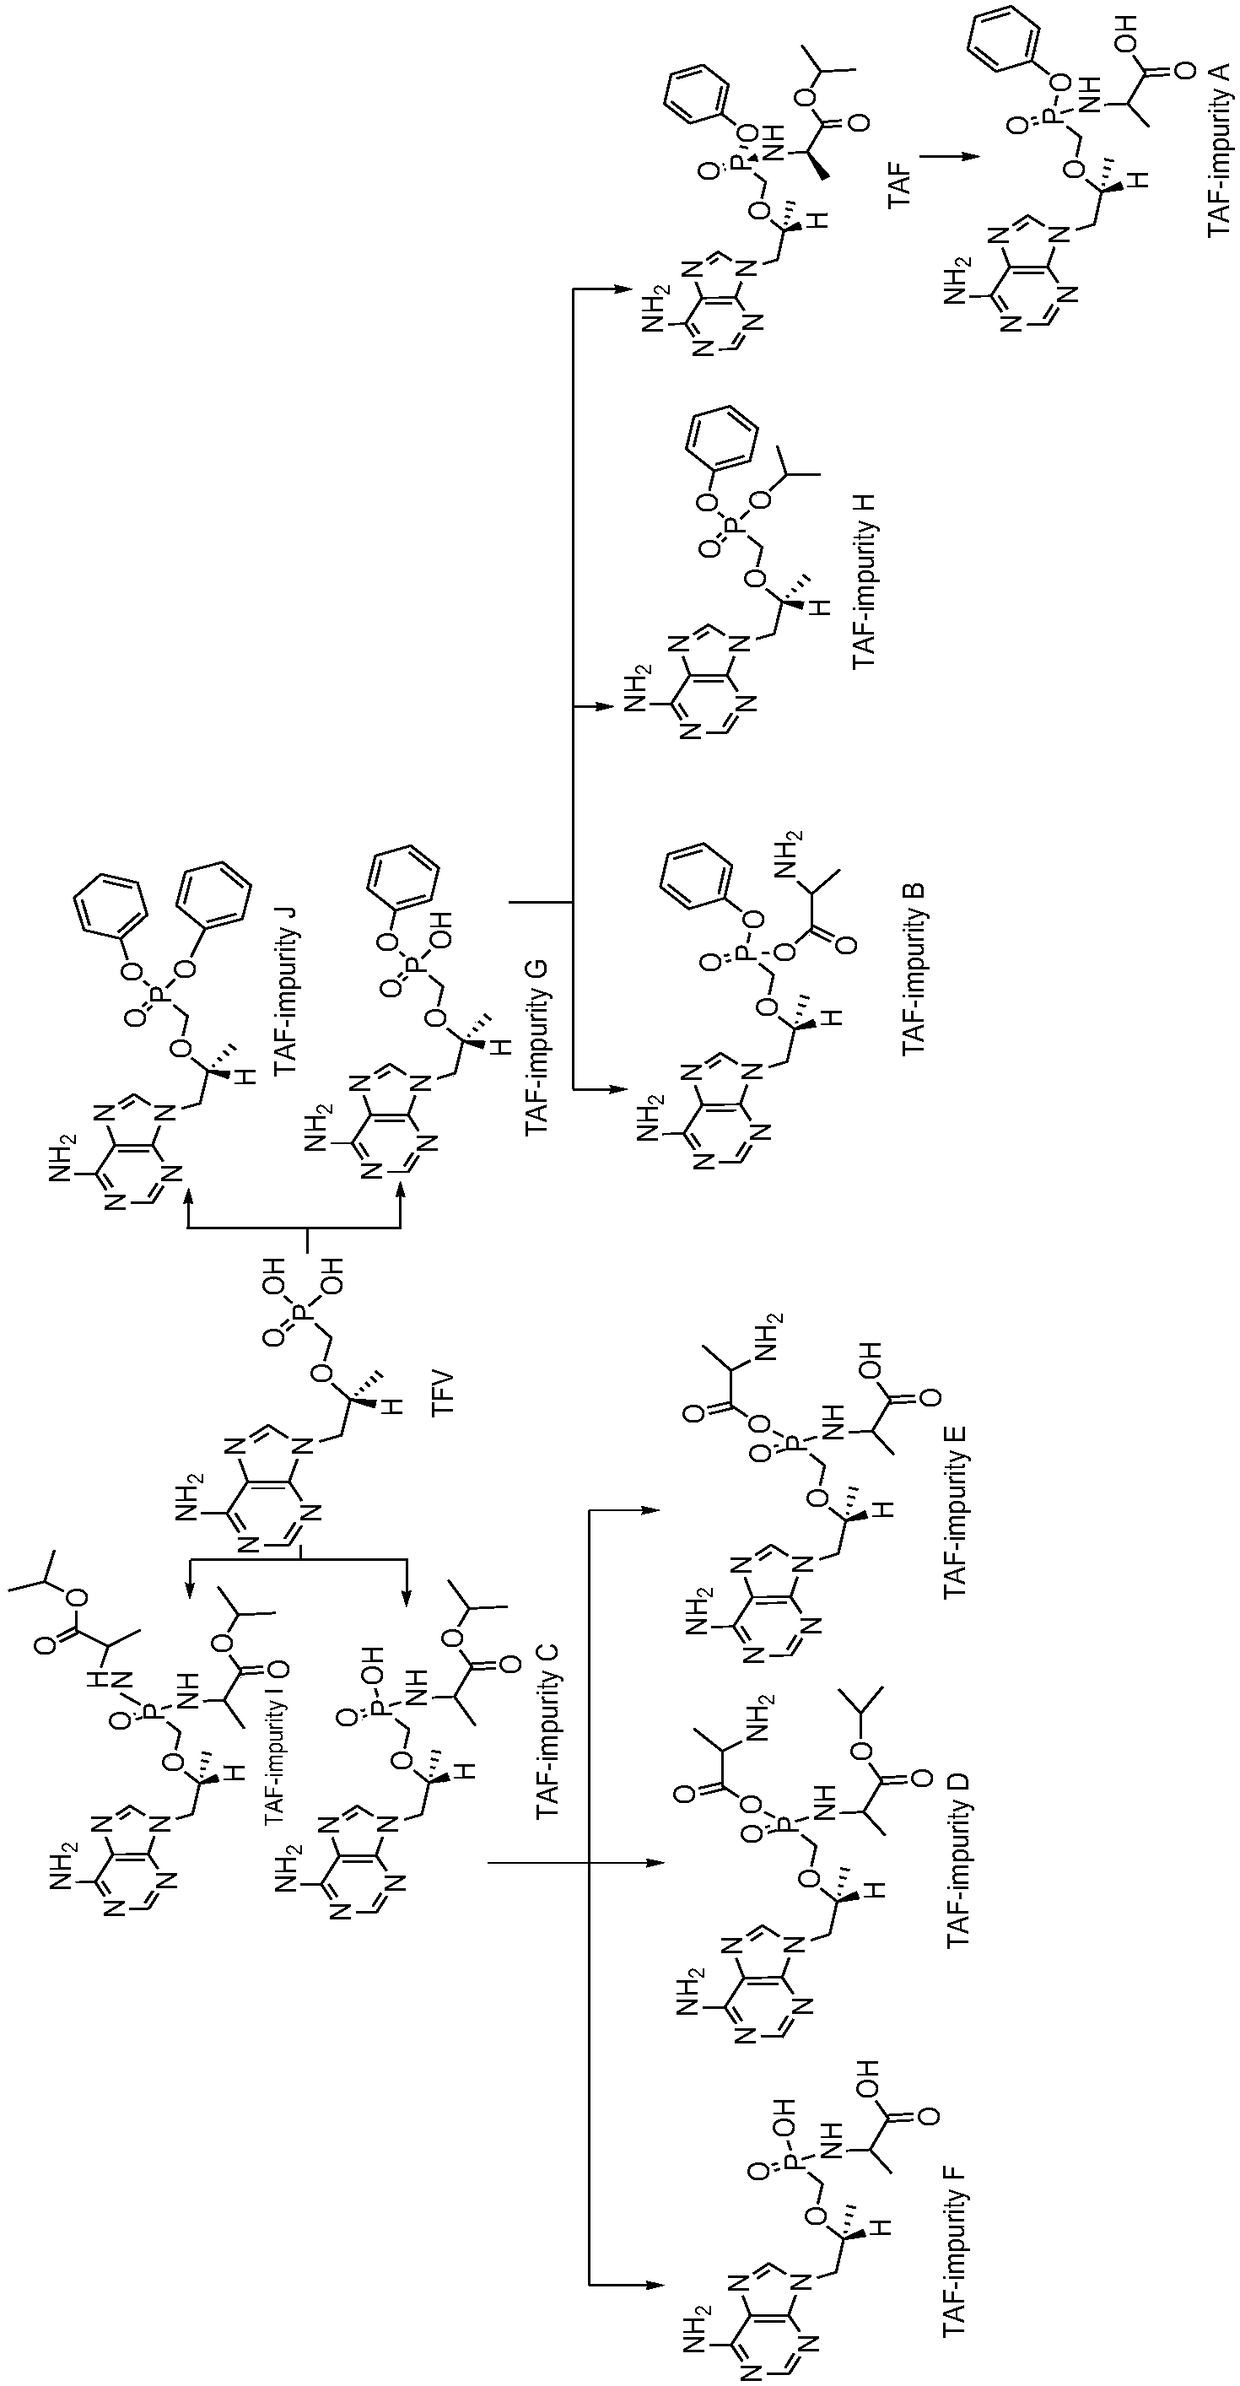 Synthesis method of potential impurities in production of tenofovir alafenamide hemifumarate